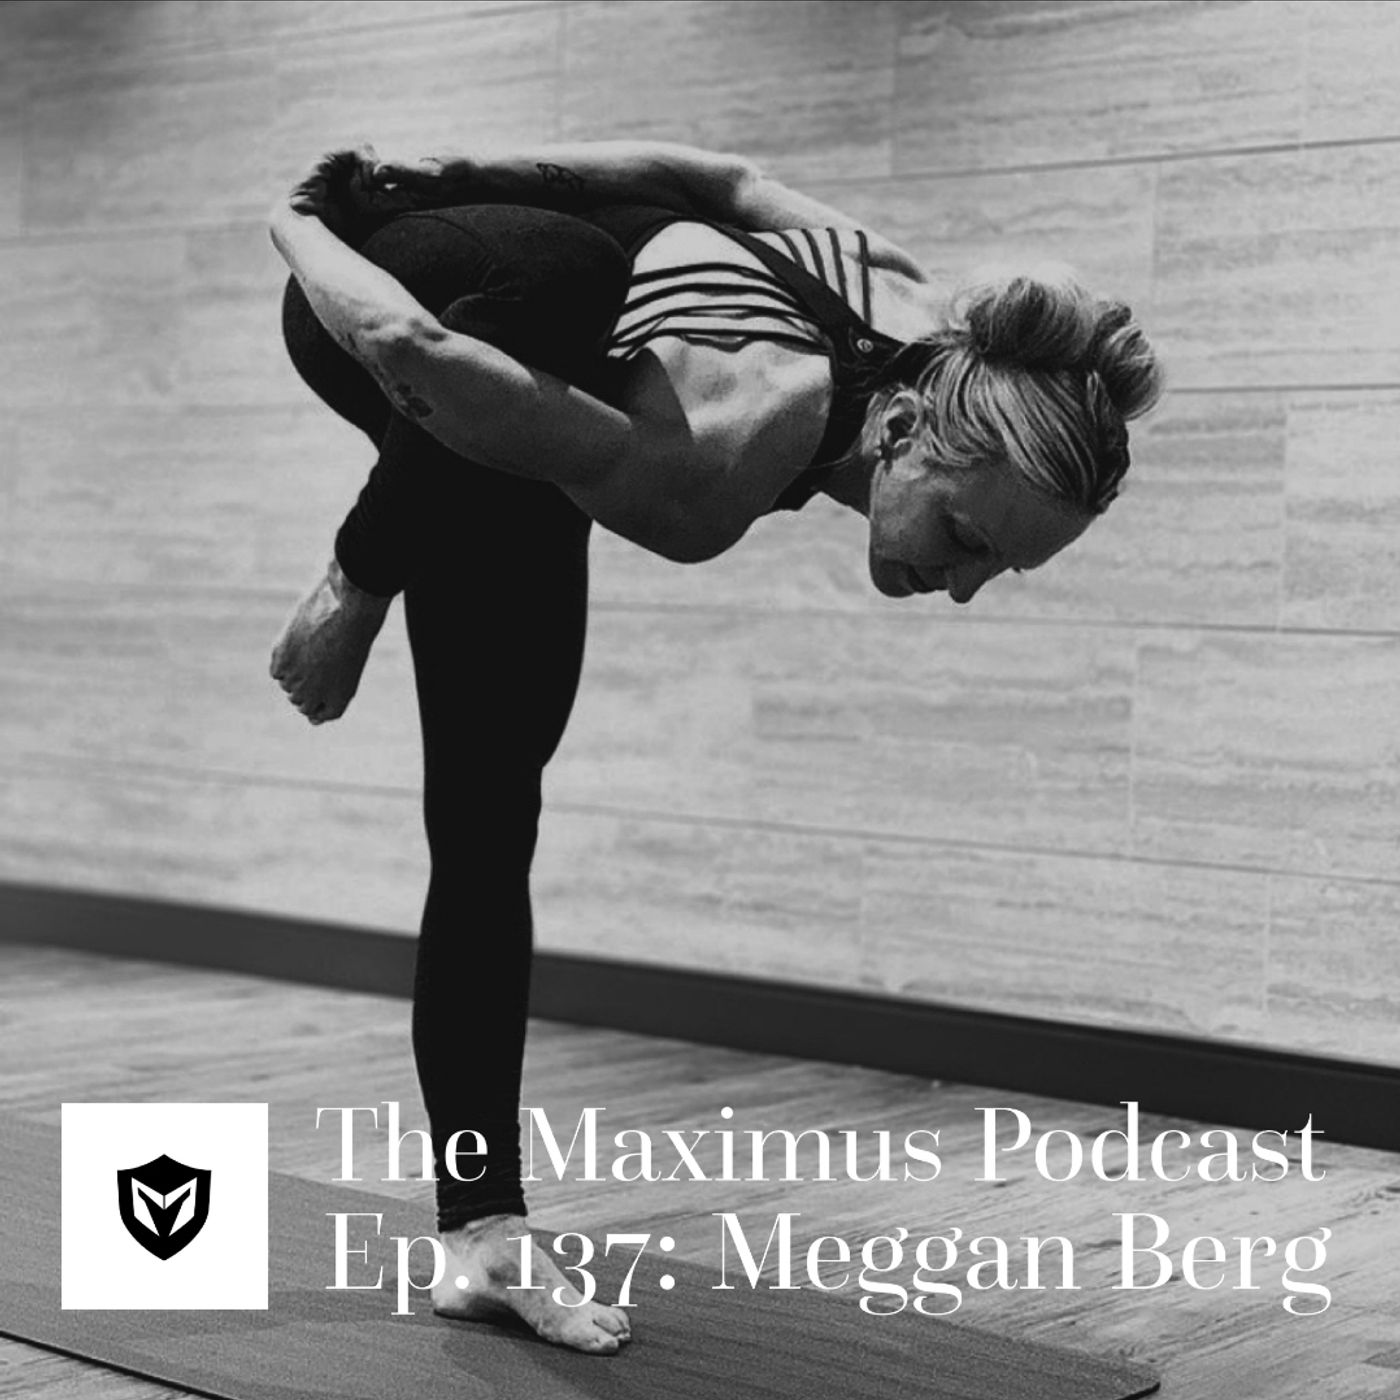 The Maximus Podcast Ep. 137 - Meggan Berg